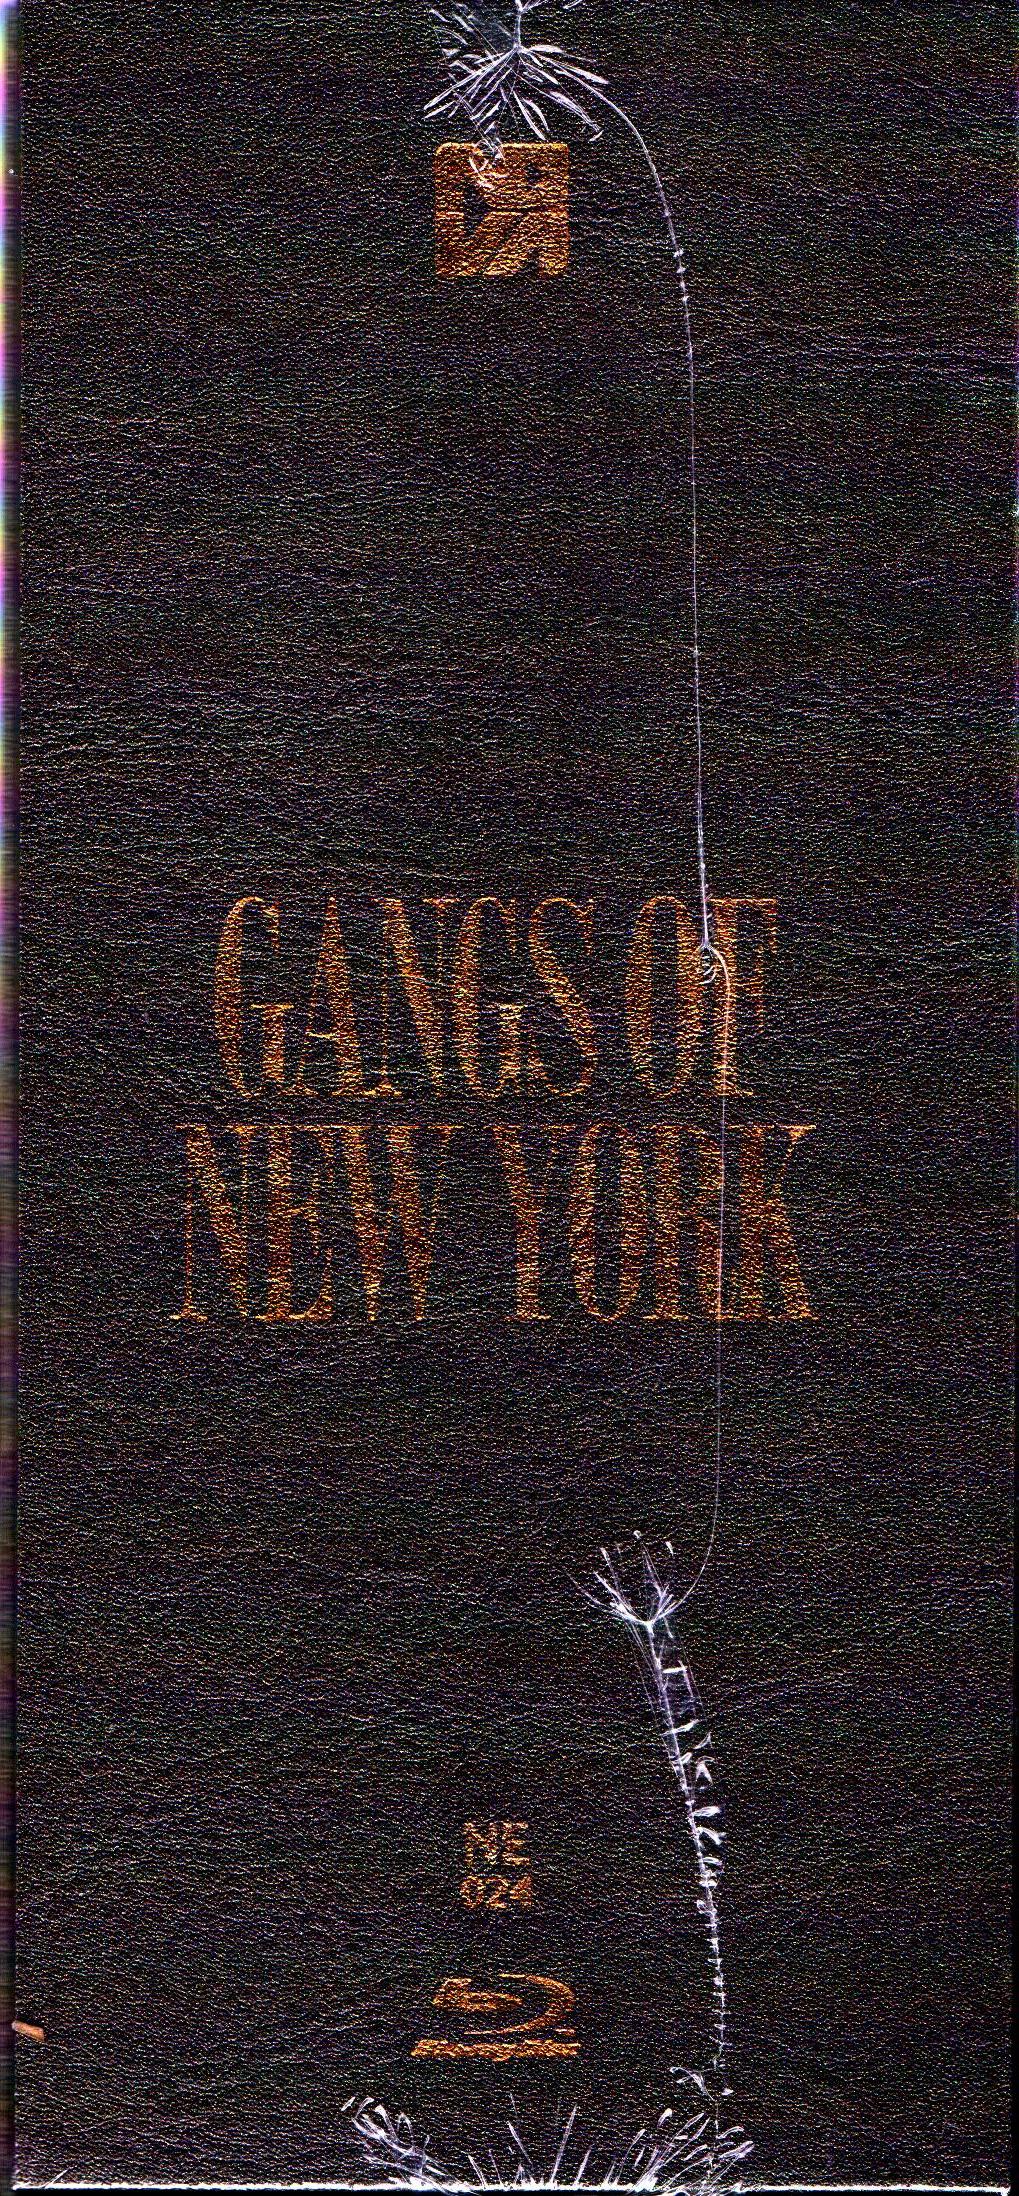 Gangs of New York 1-Click SteelBook (NE#24)(EMPTY)(Korea)(Slip Box)